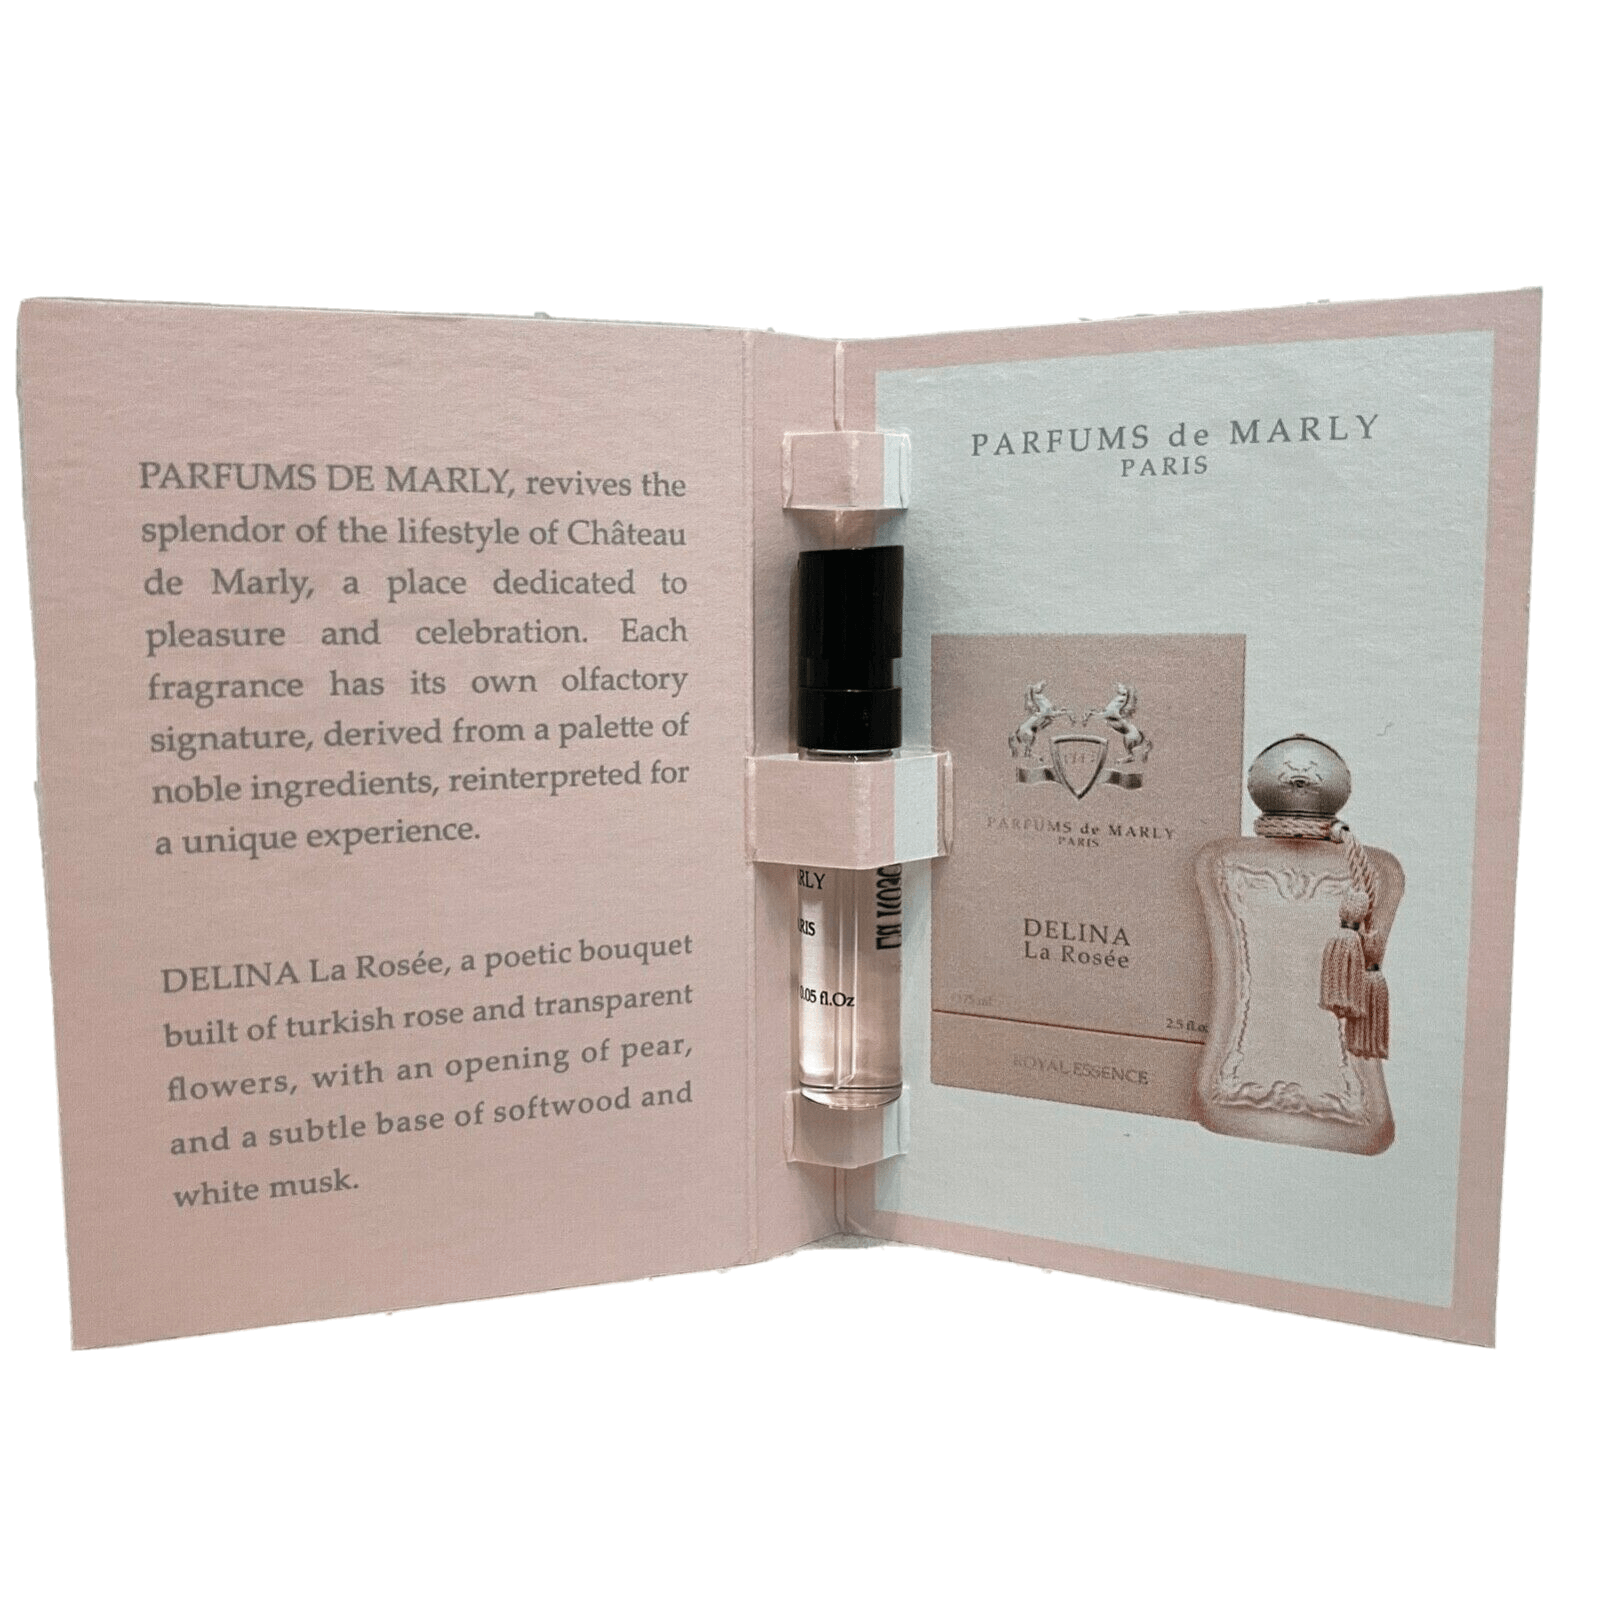 Parfums De Marly Delina La Rosee officiel parfumeprøve 1.5 ml 0.05 fl. oz